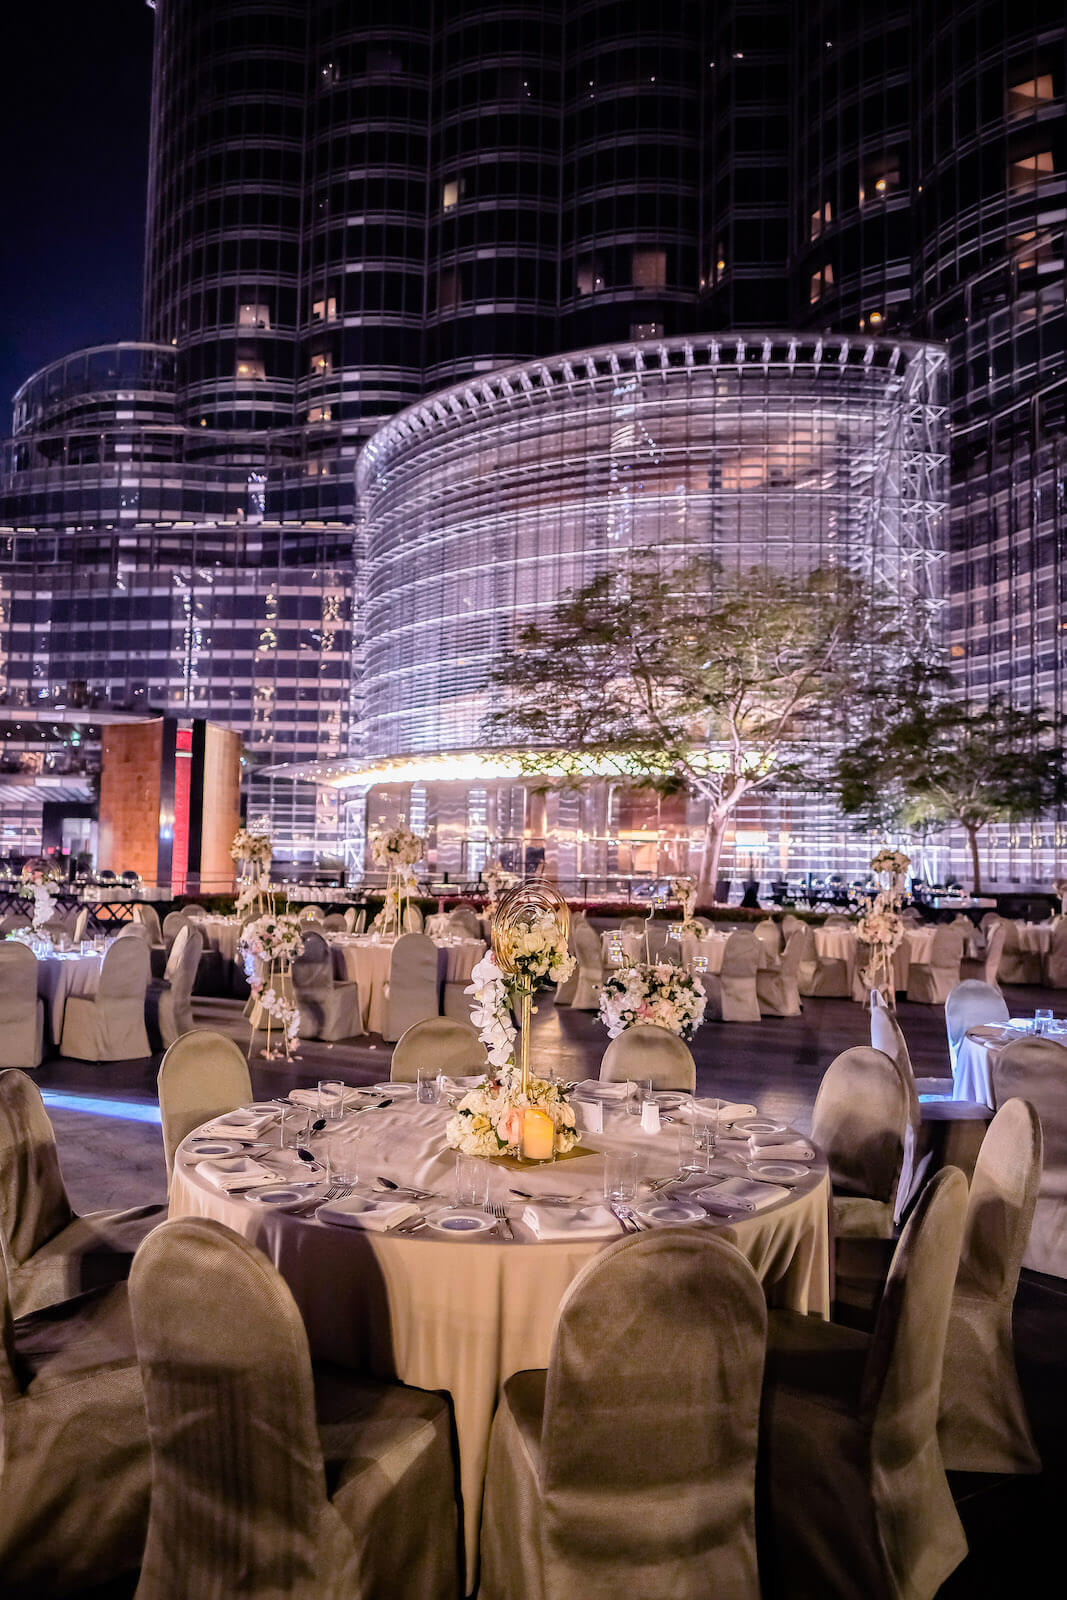 Armani Hotel Dubai – A Stunning Dubai Wedding Venue.